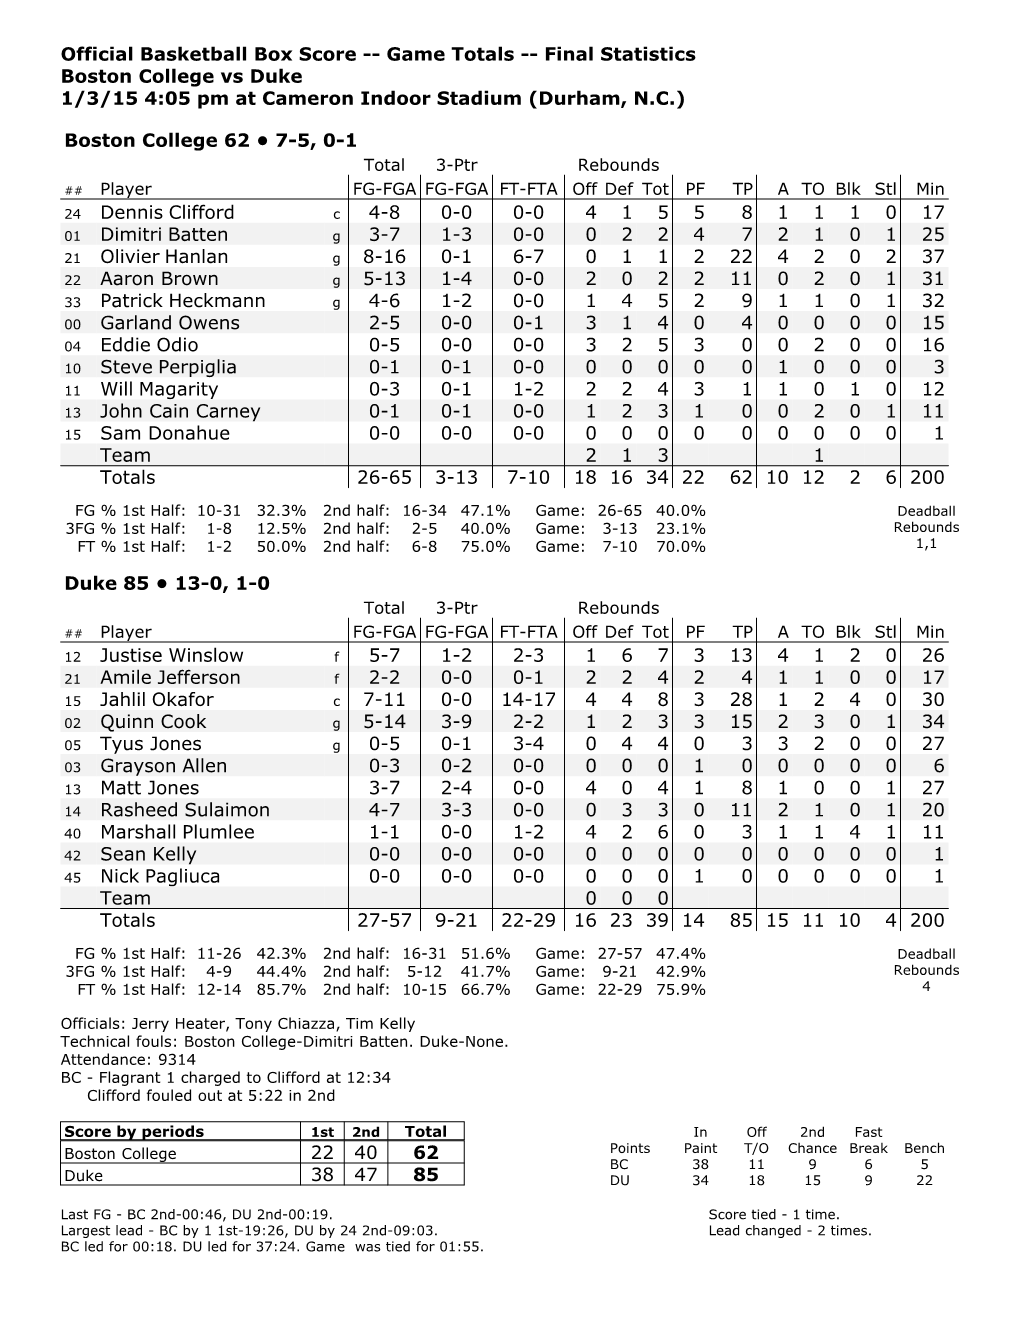 Official Basketball Box Score -- Game Totals -- Final Statistics Boston College Vs Duke 1/3/15 4:05 Pm at Cameron Indoor Stadium (Durham, N.C.)